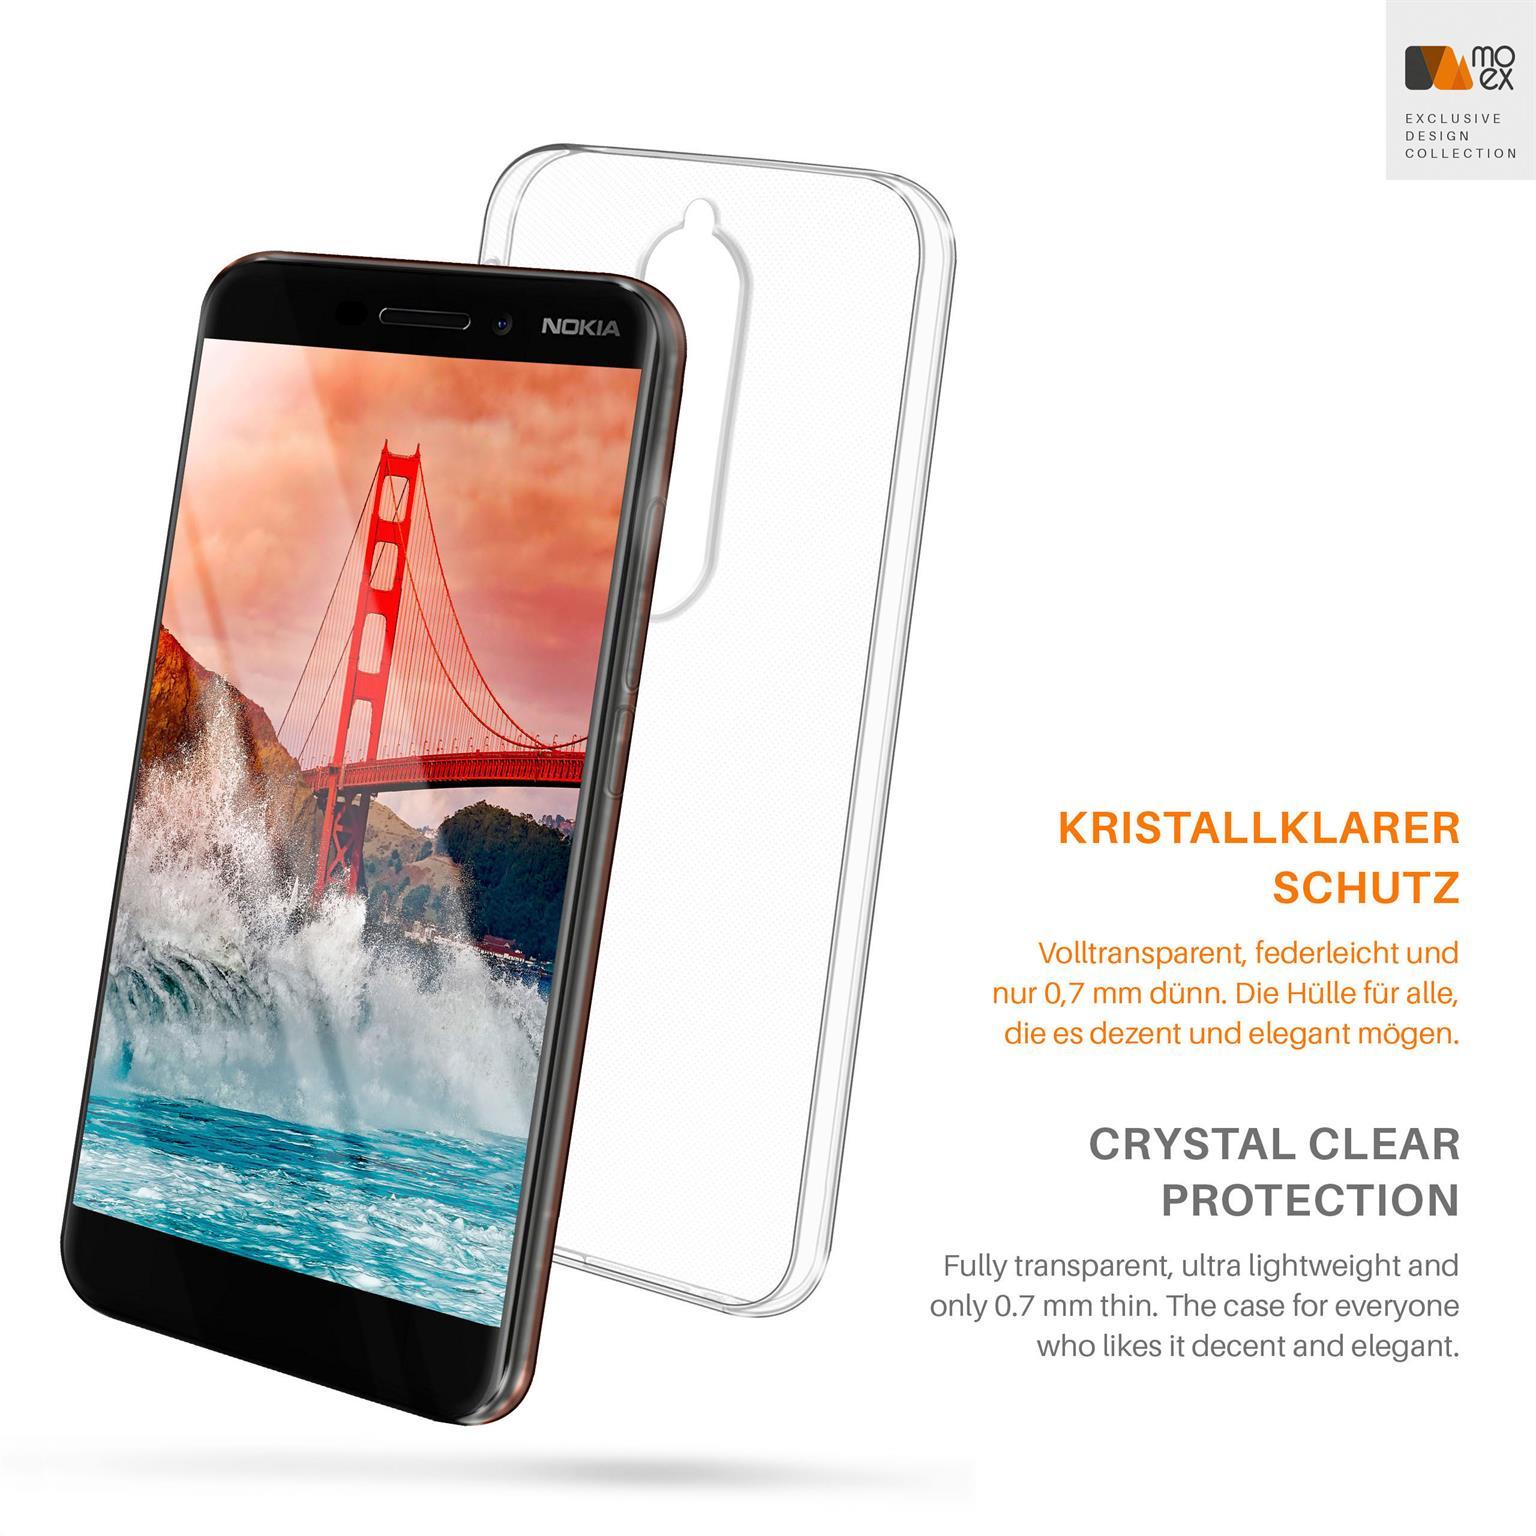 Backcover, Crystal-Clear Aero MOEX 6.1, Nokia, Case,